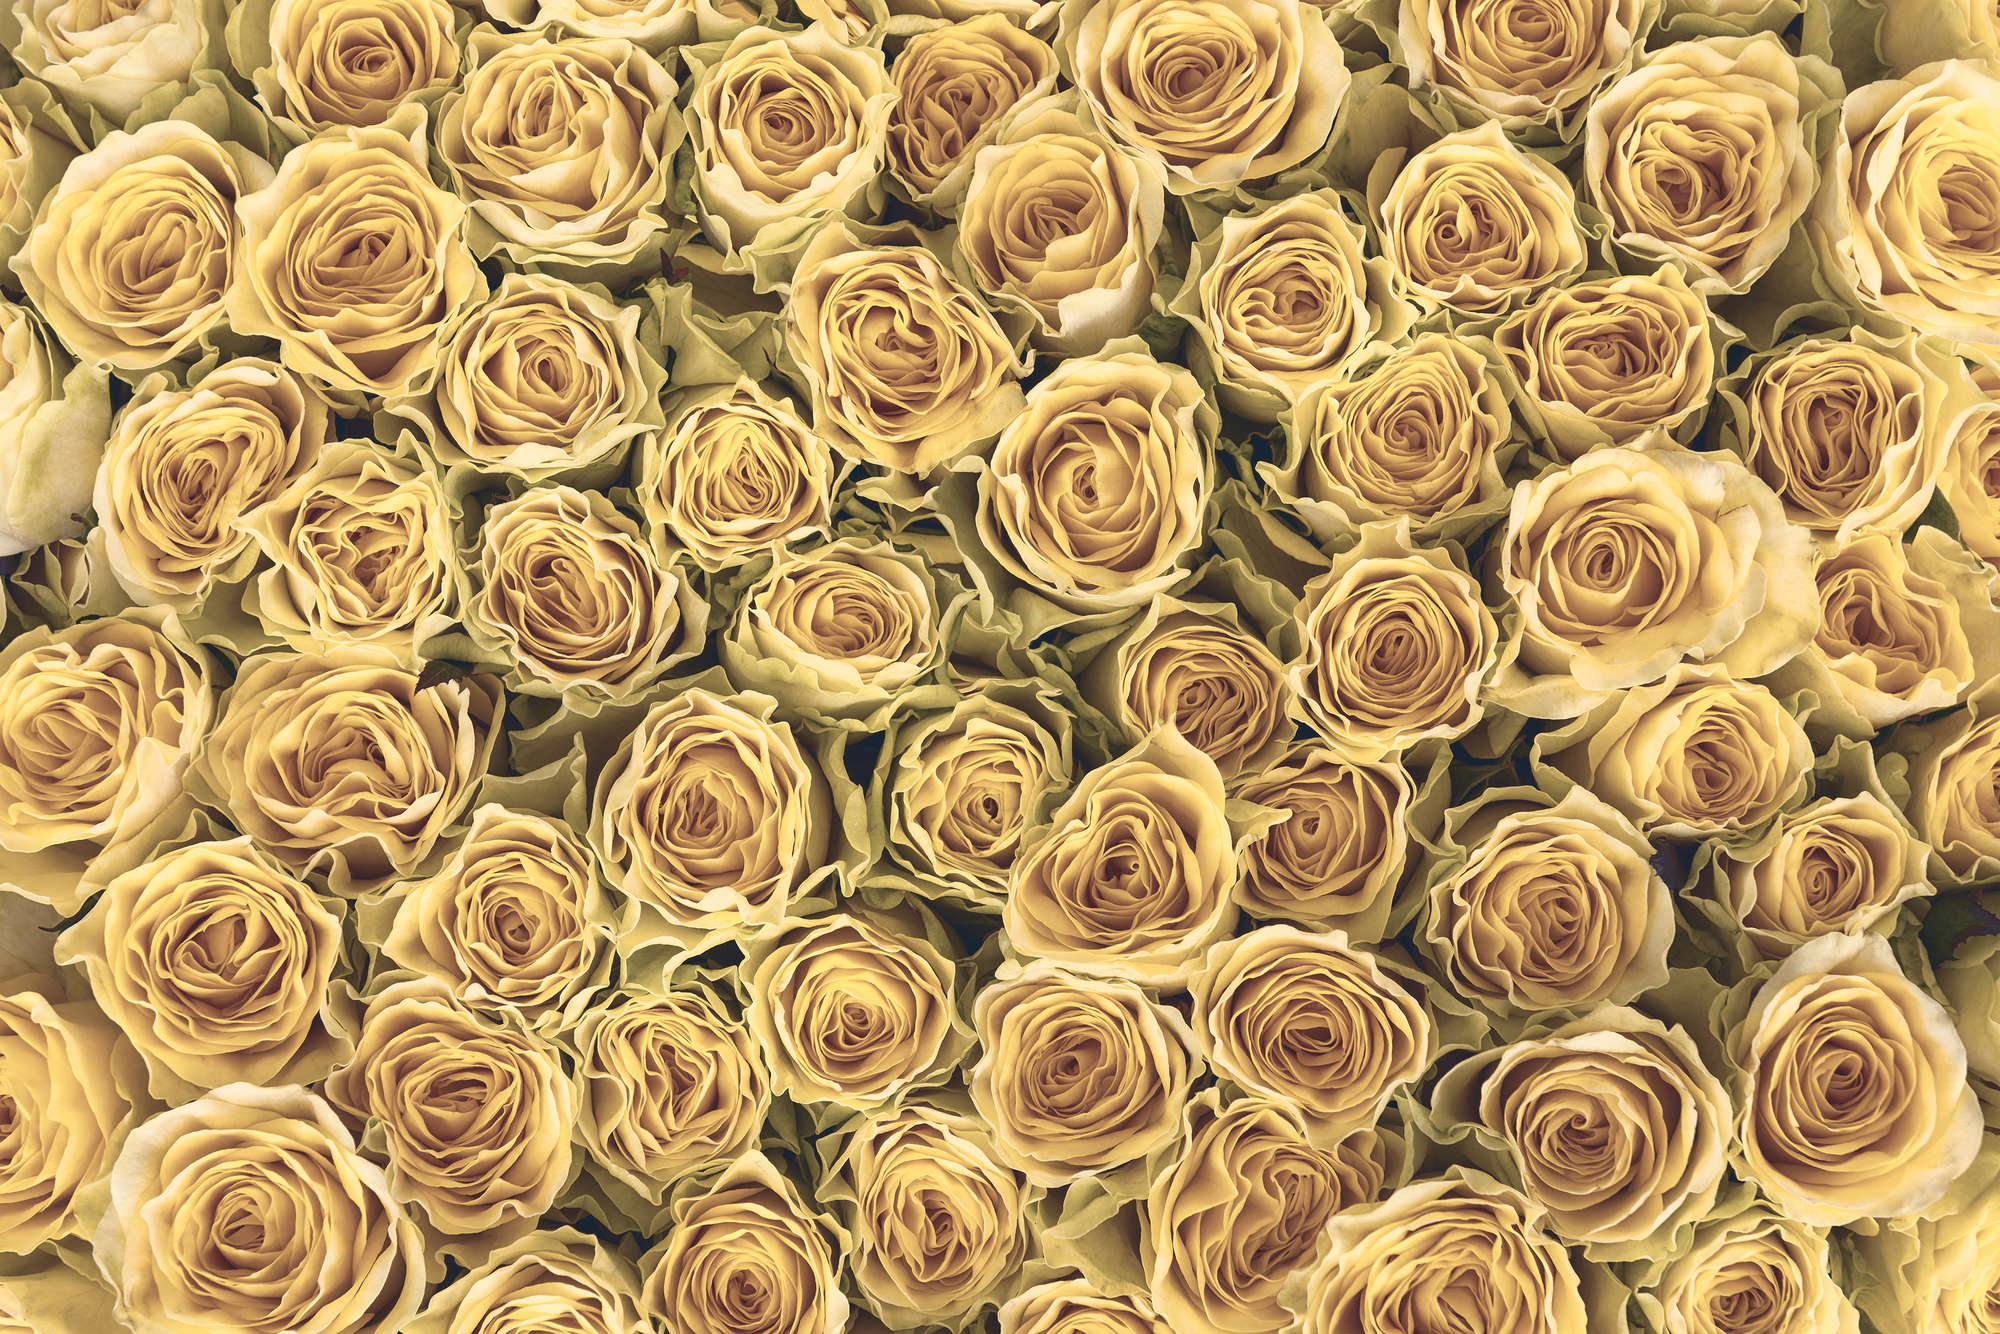             Pflanzen Fototapete goldene Rosen auf Strukturvlies
        